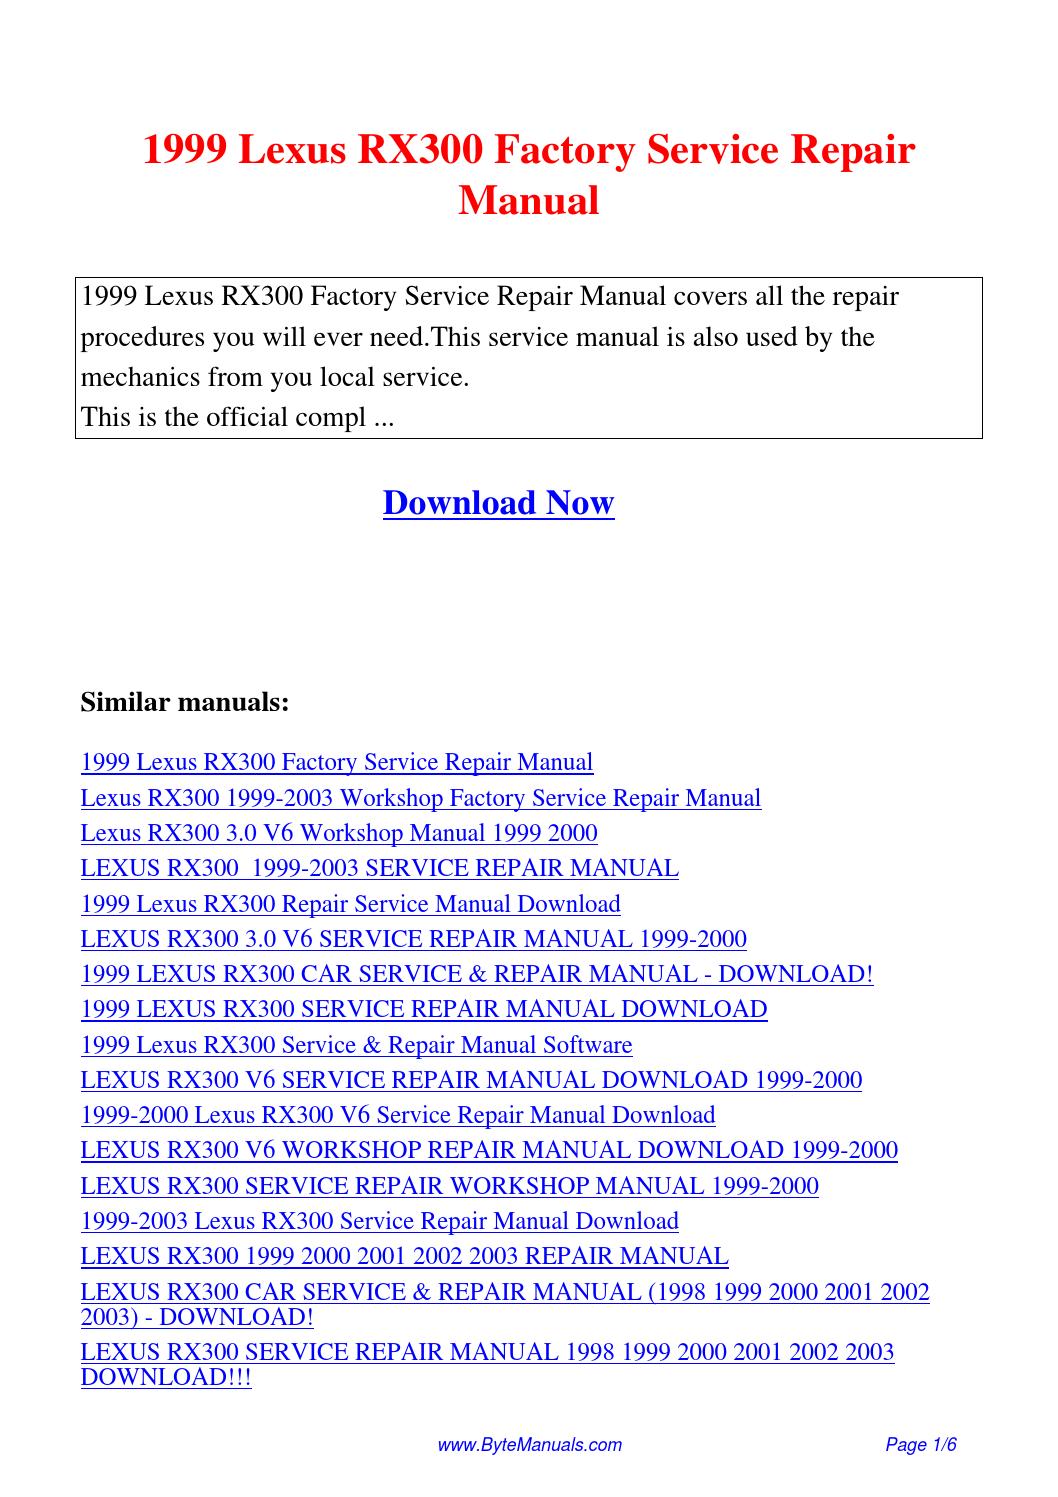 Rx300 Service Manual Download